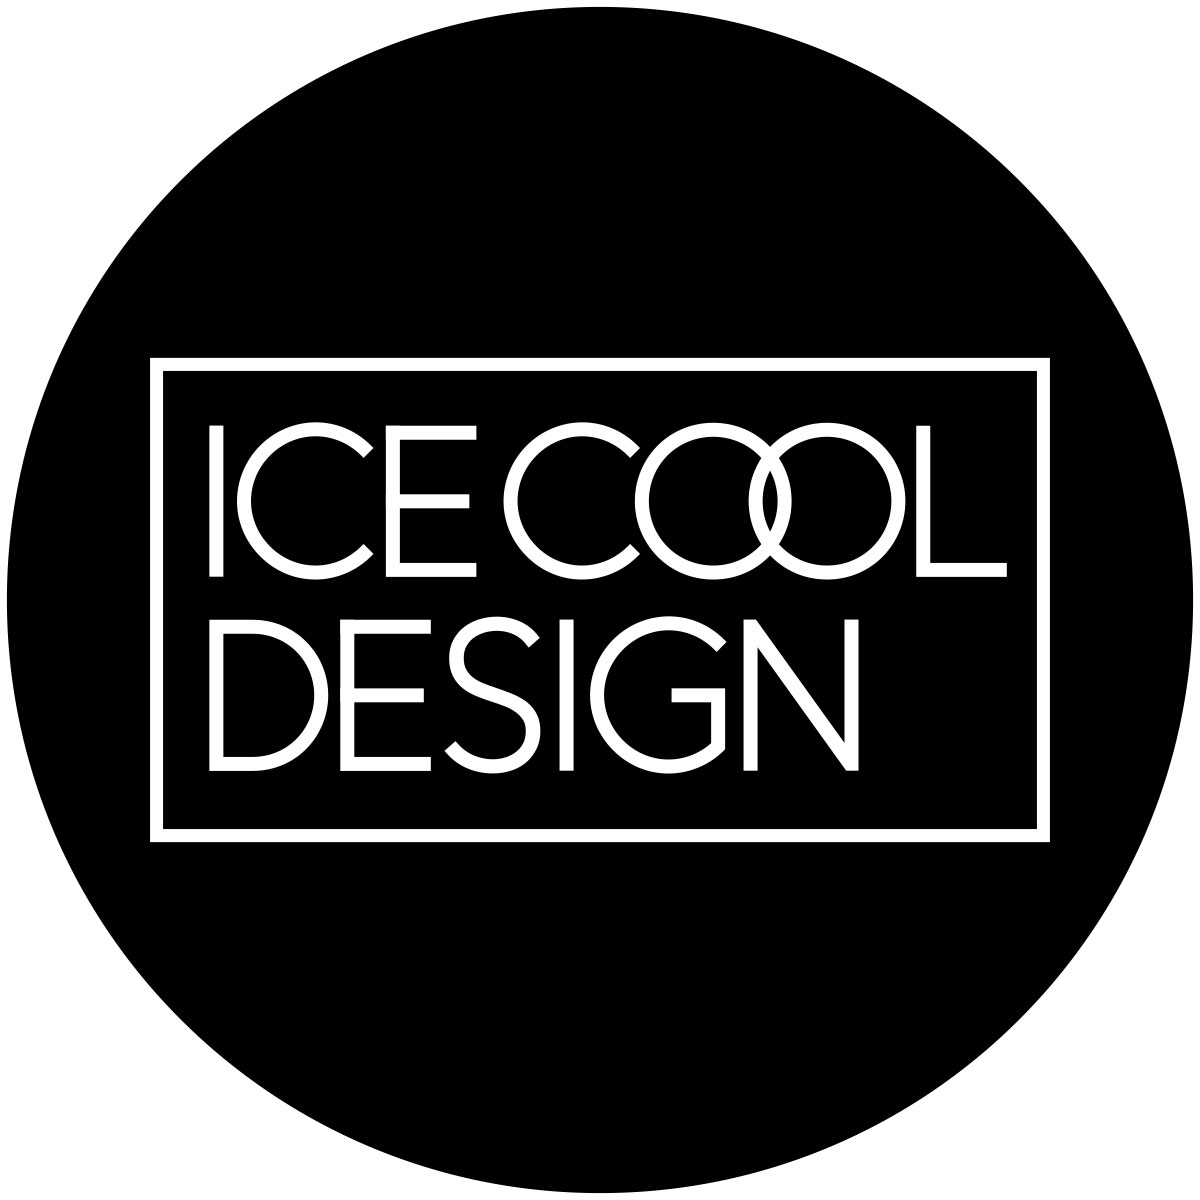 Ice Cool Design - Hielo